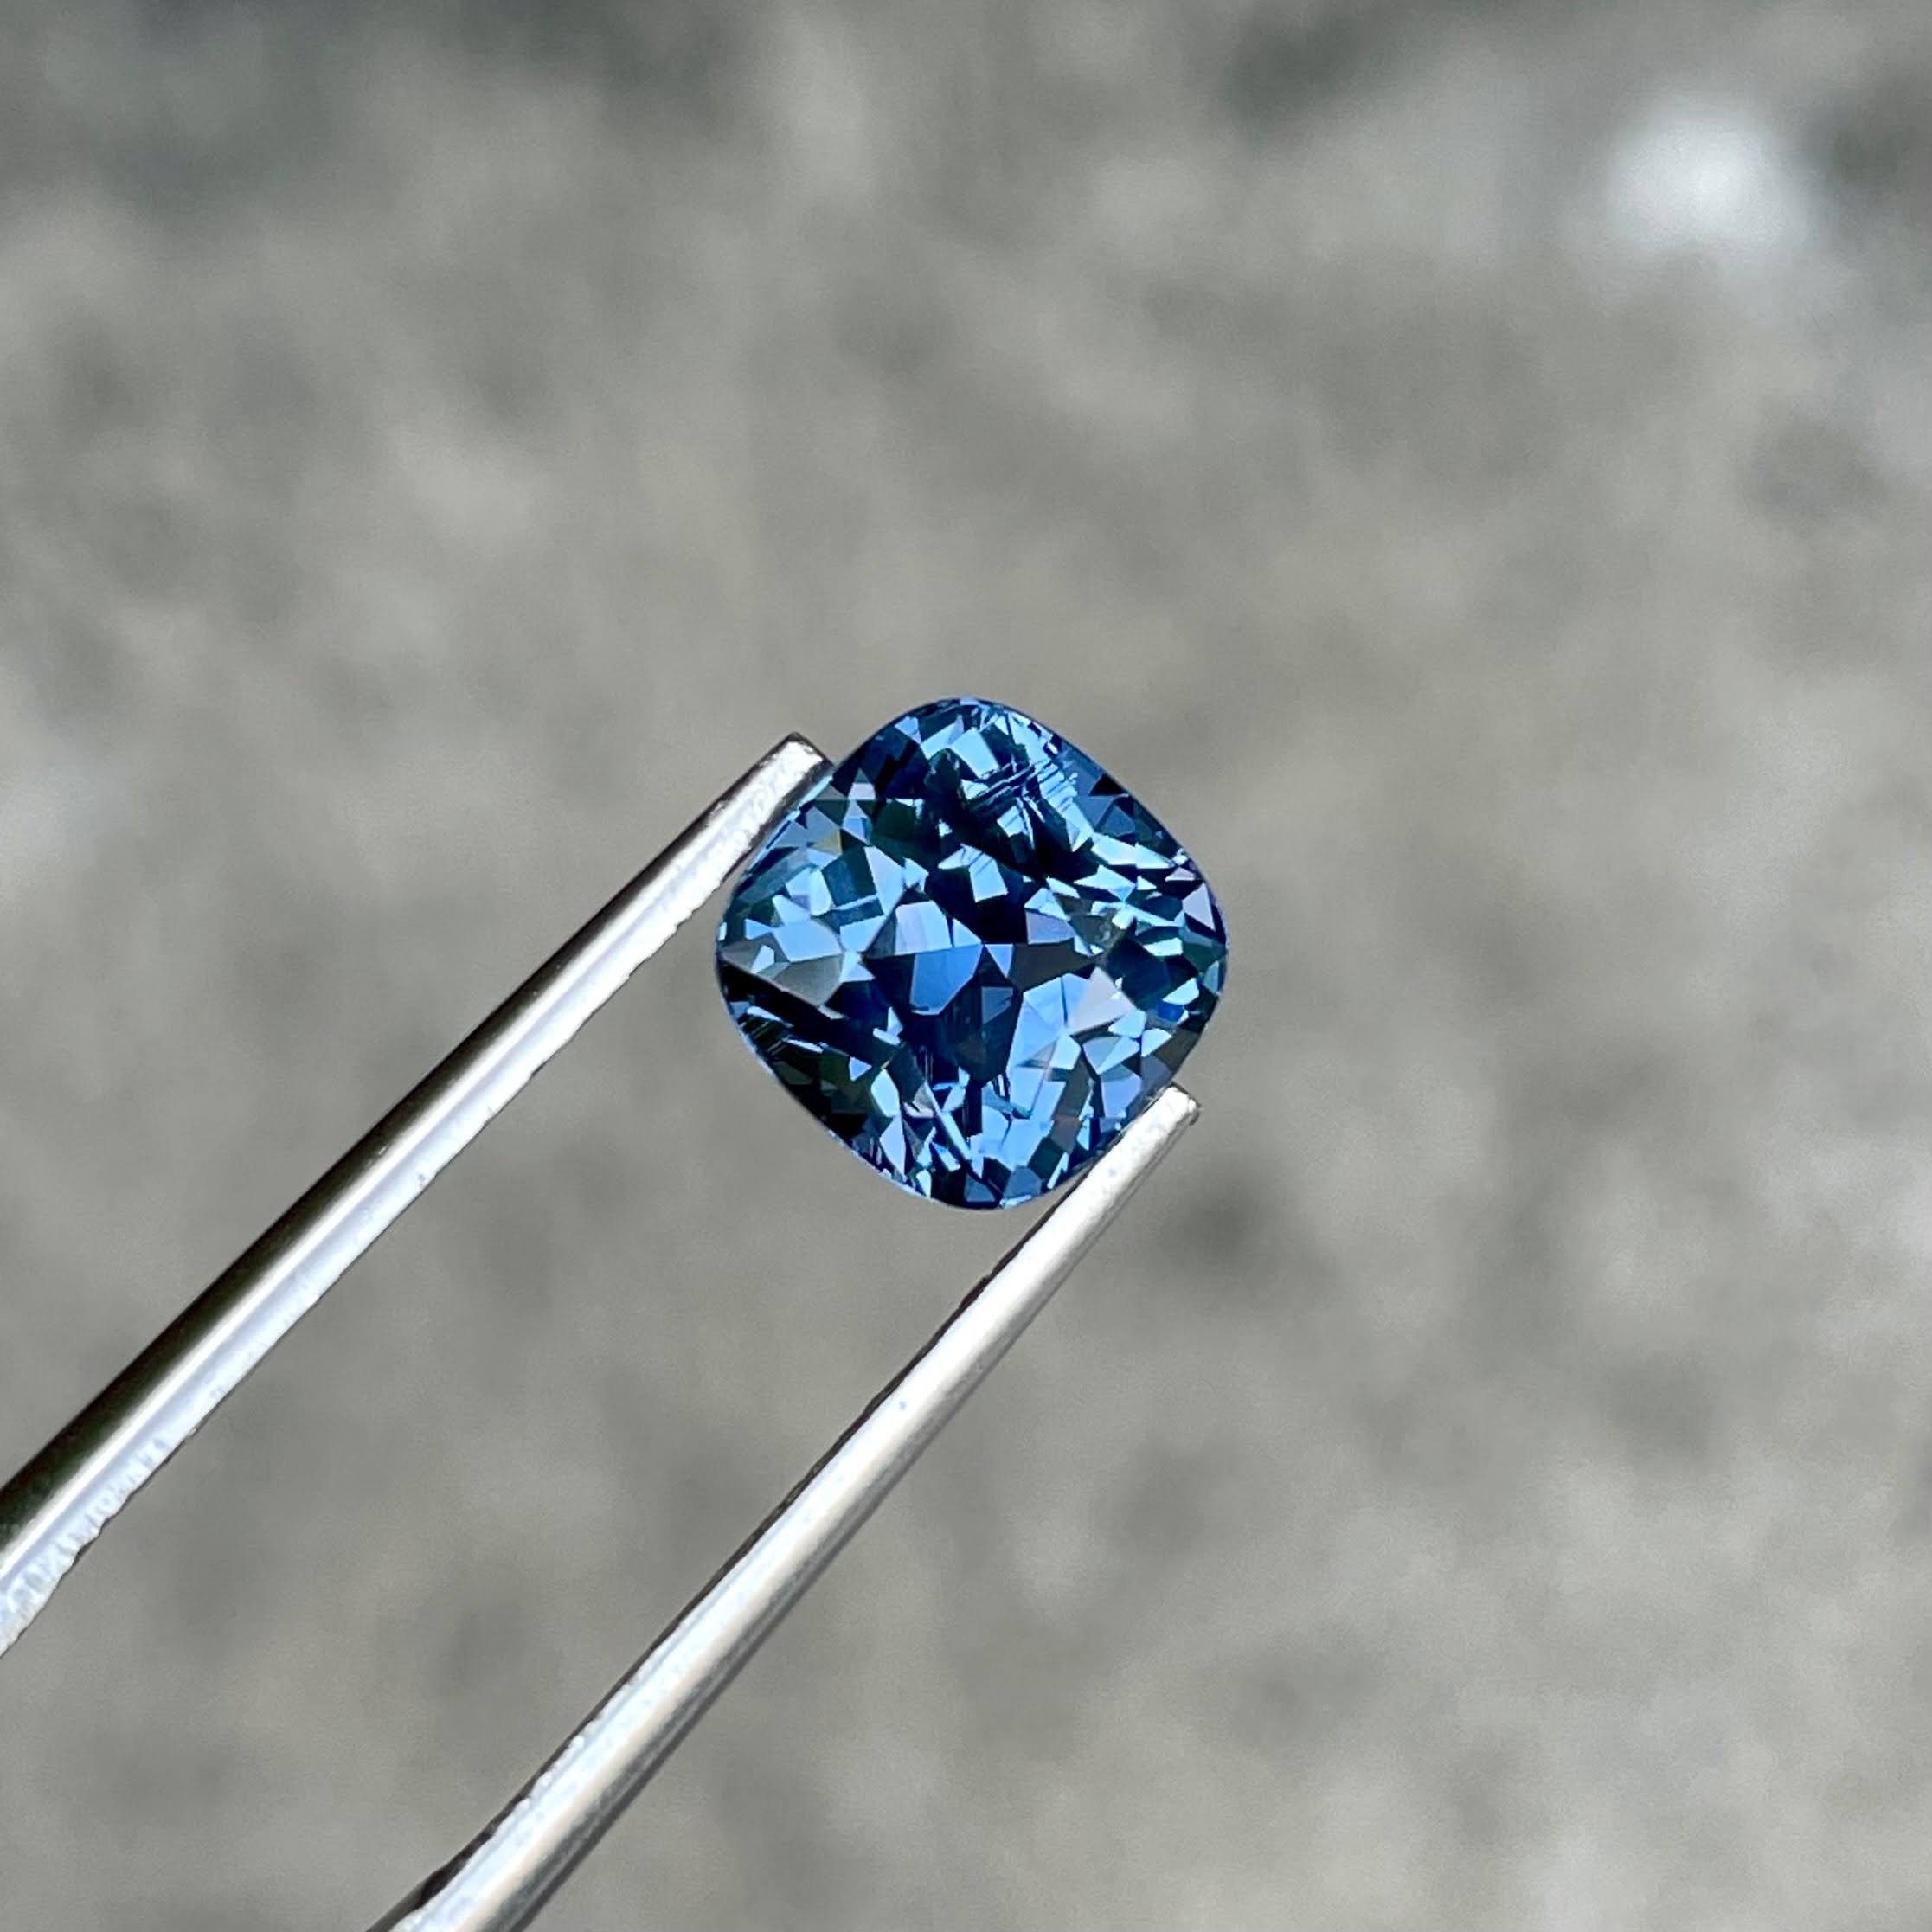 2.50 Carats Violet Blue Spinel Stone